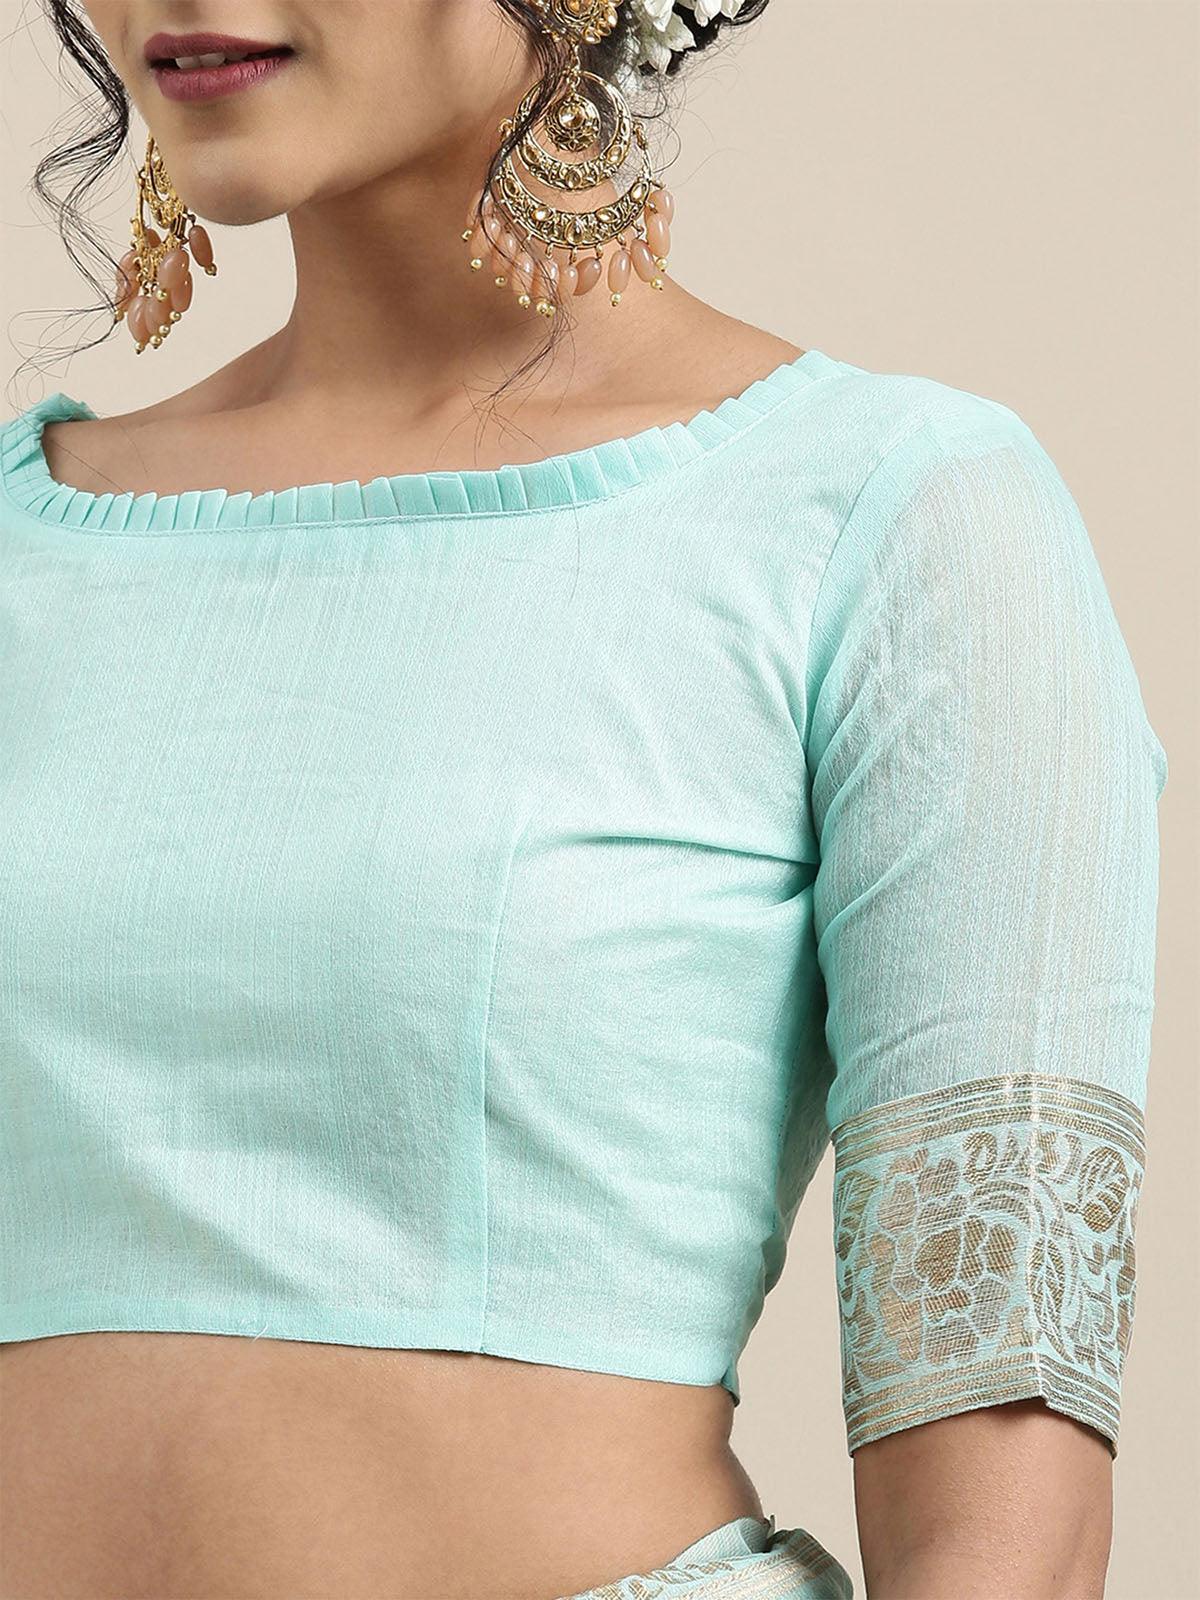 Women's Linen Sea Green Woven Design Woven saree With Blouse Piece - Odette